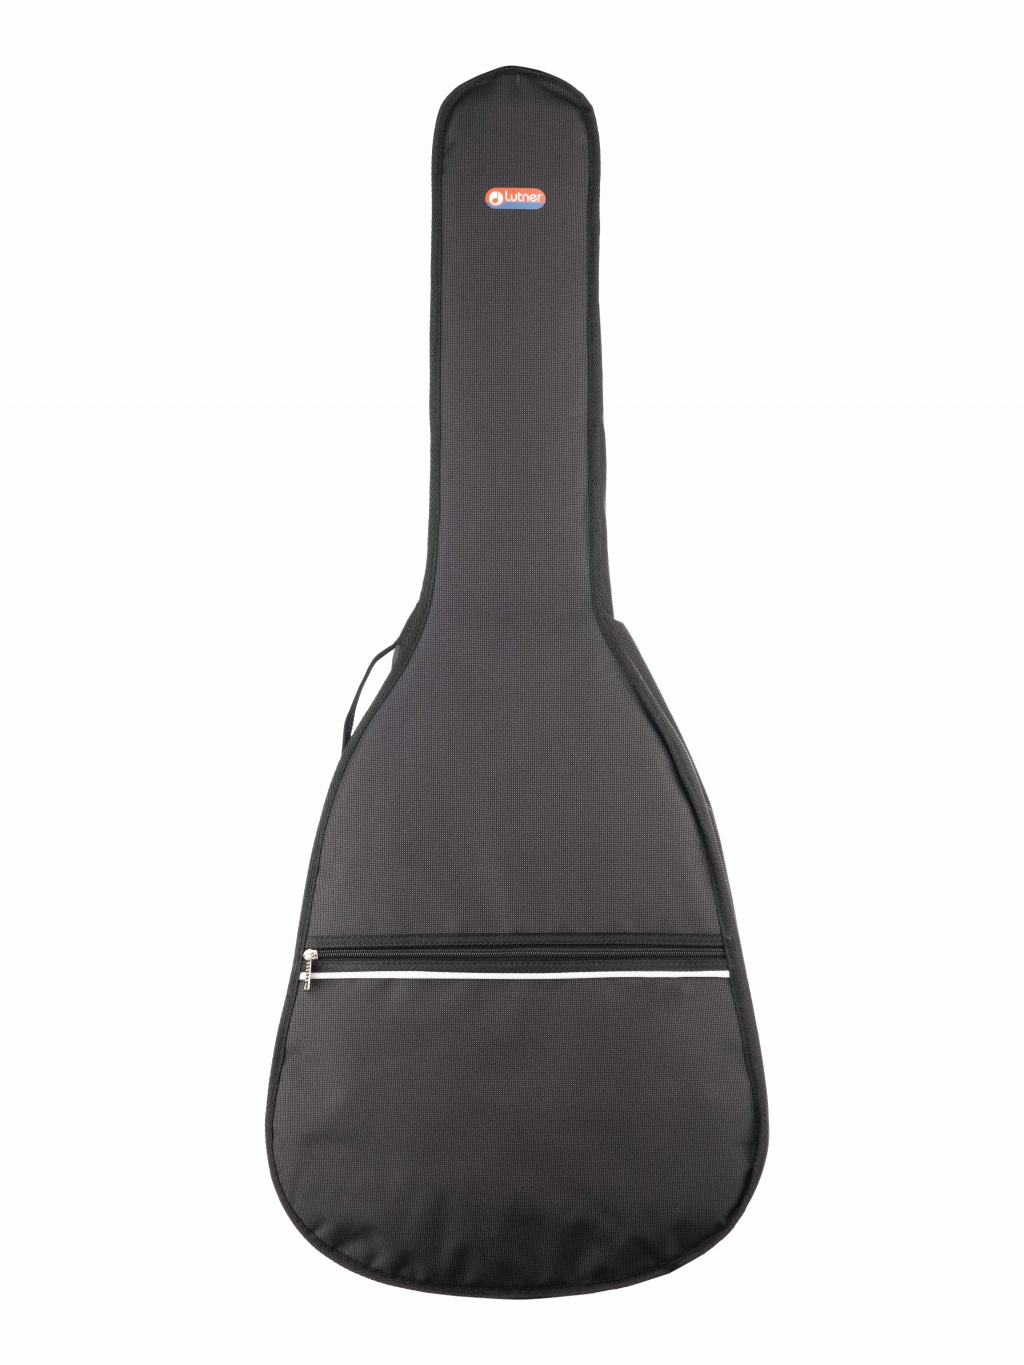 Lutner LCG-4G Чехол для классической гитары серый